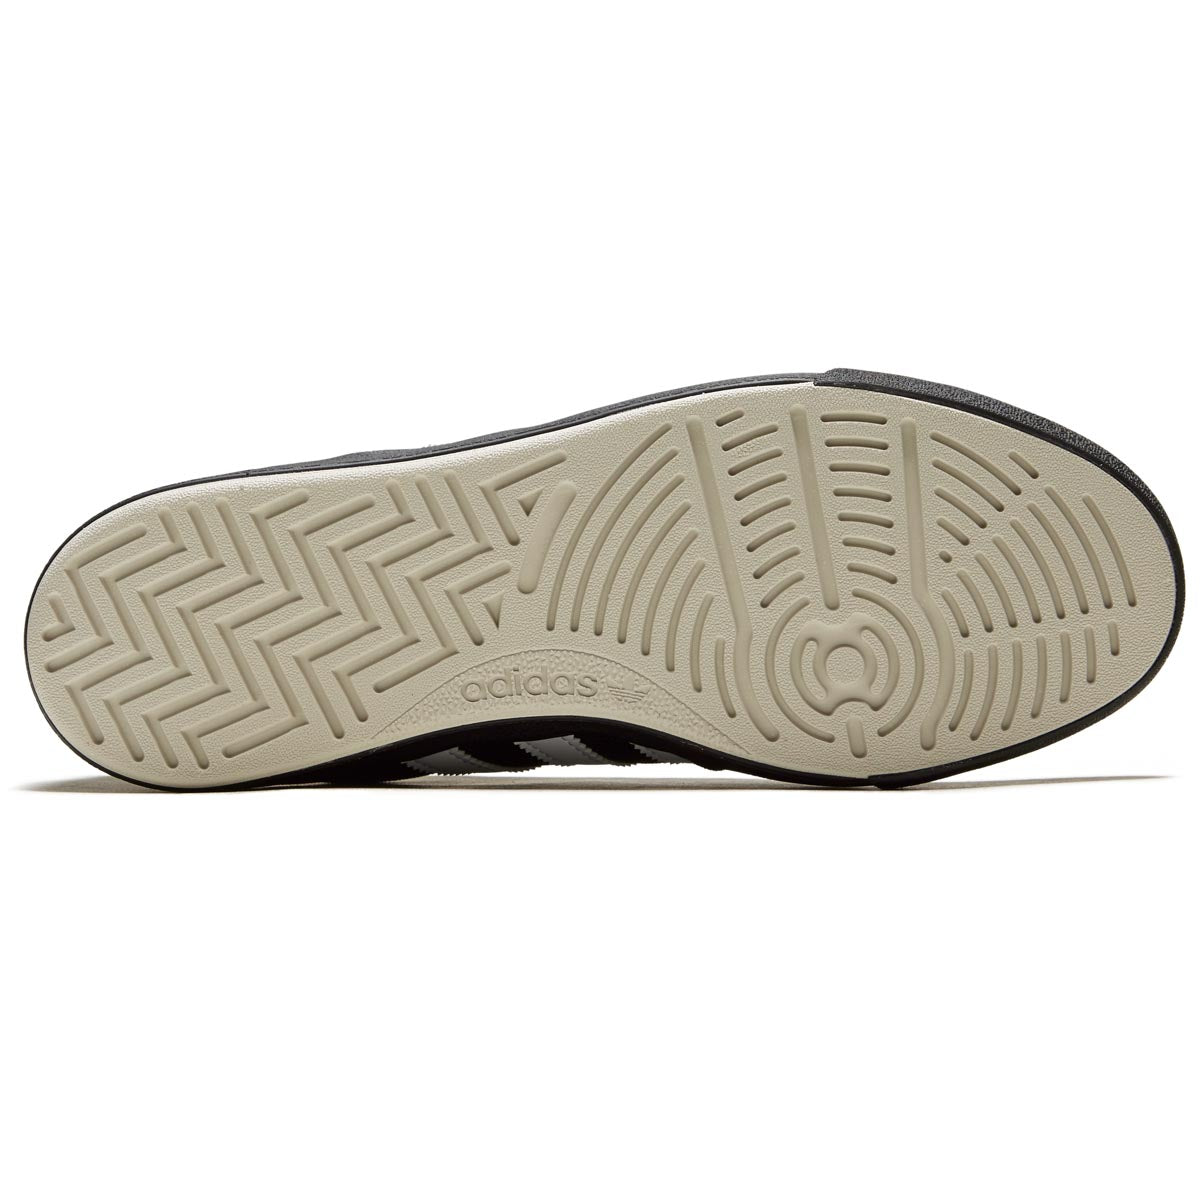 Adidas Nora Shoes - Core Black/White/Gold Metallic image 4